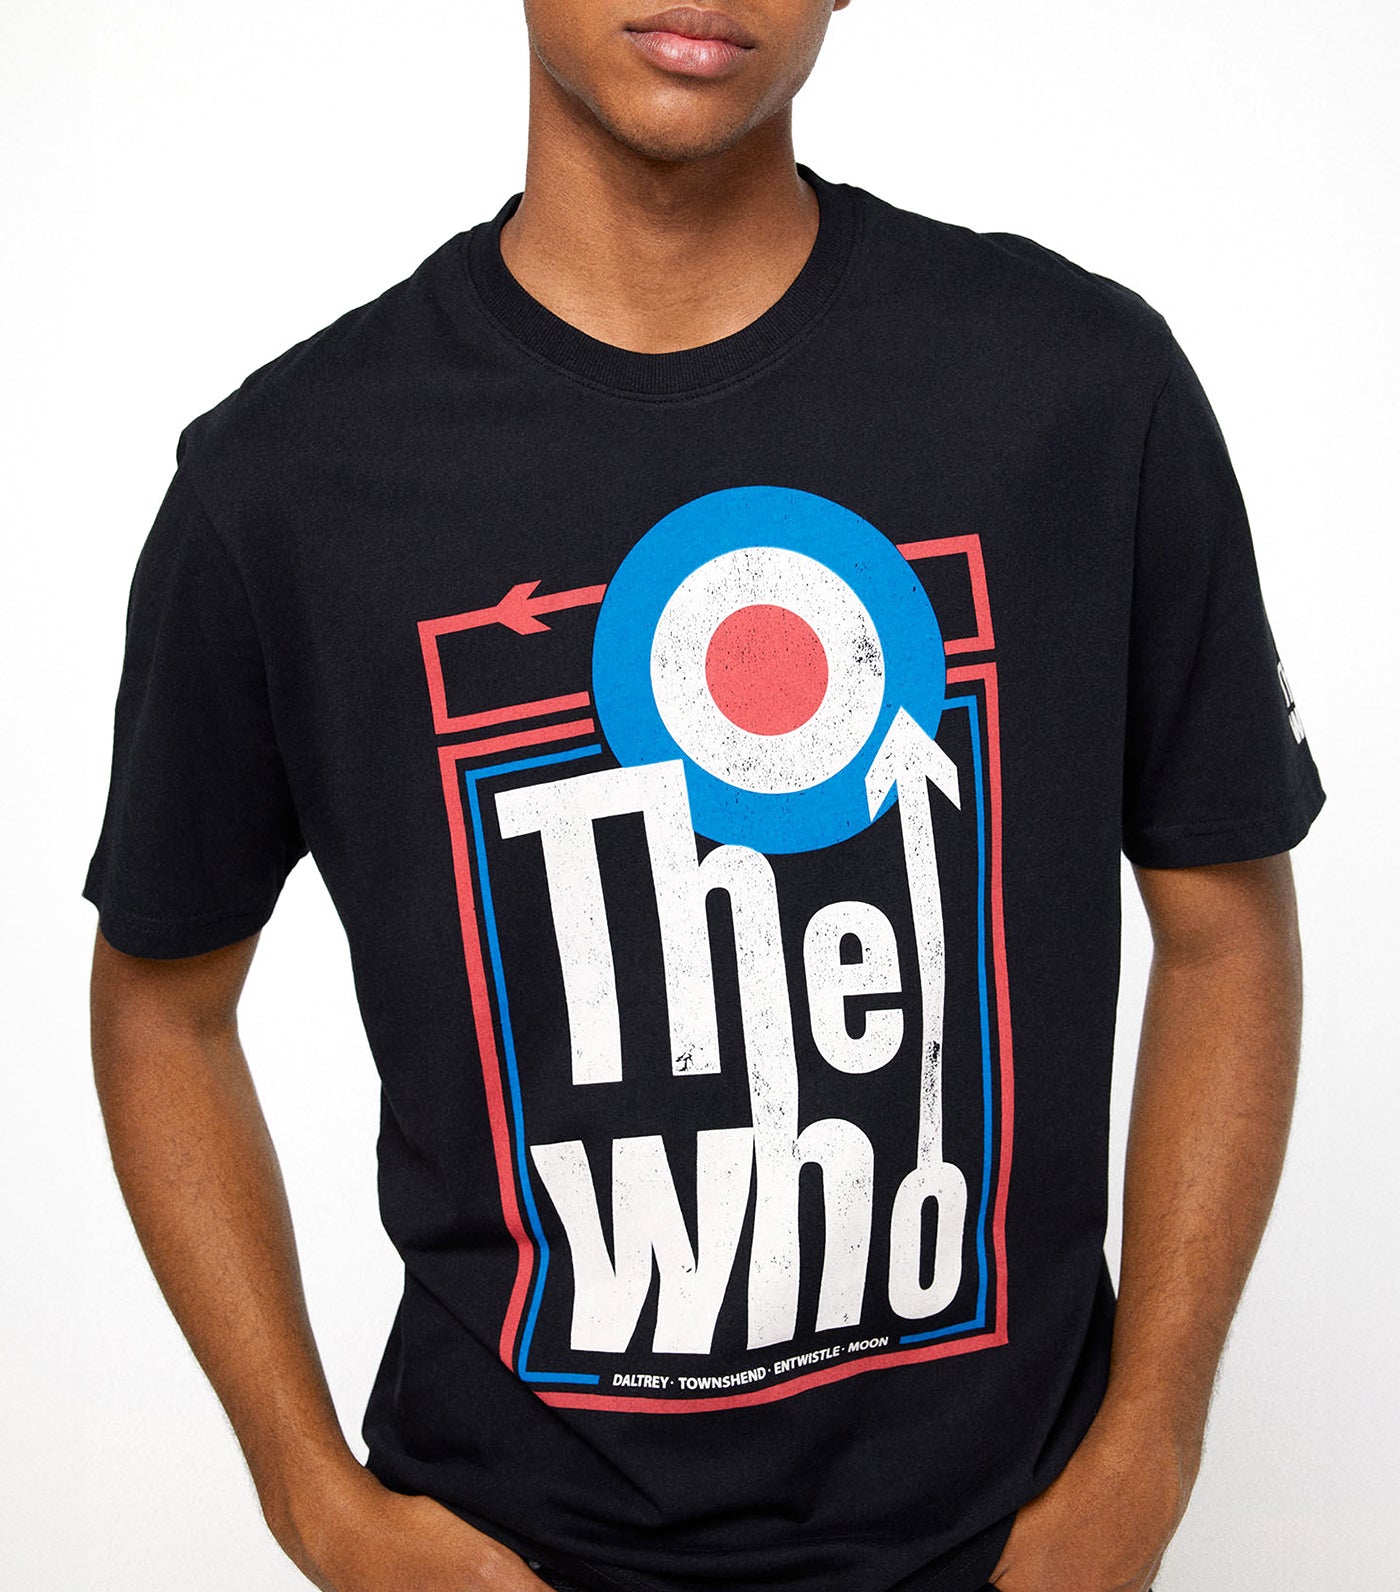 The Who T-Shirt Black